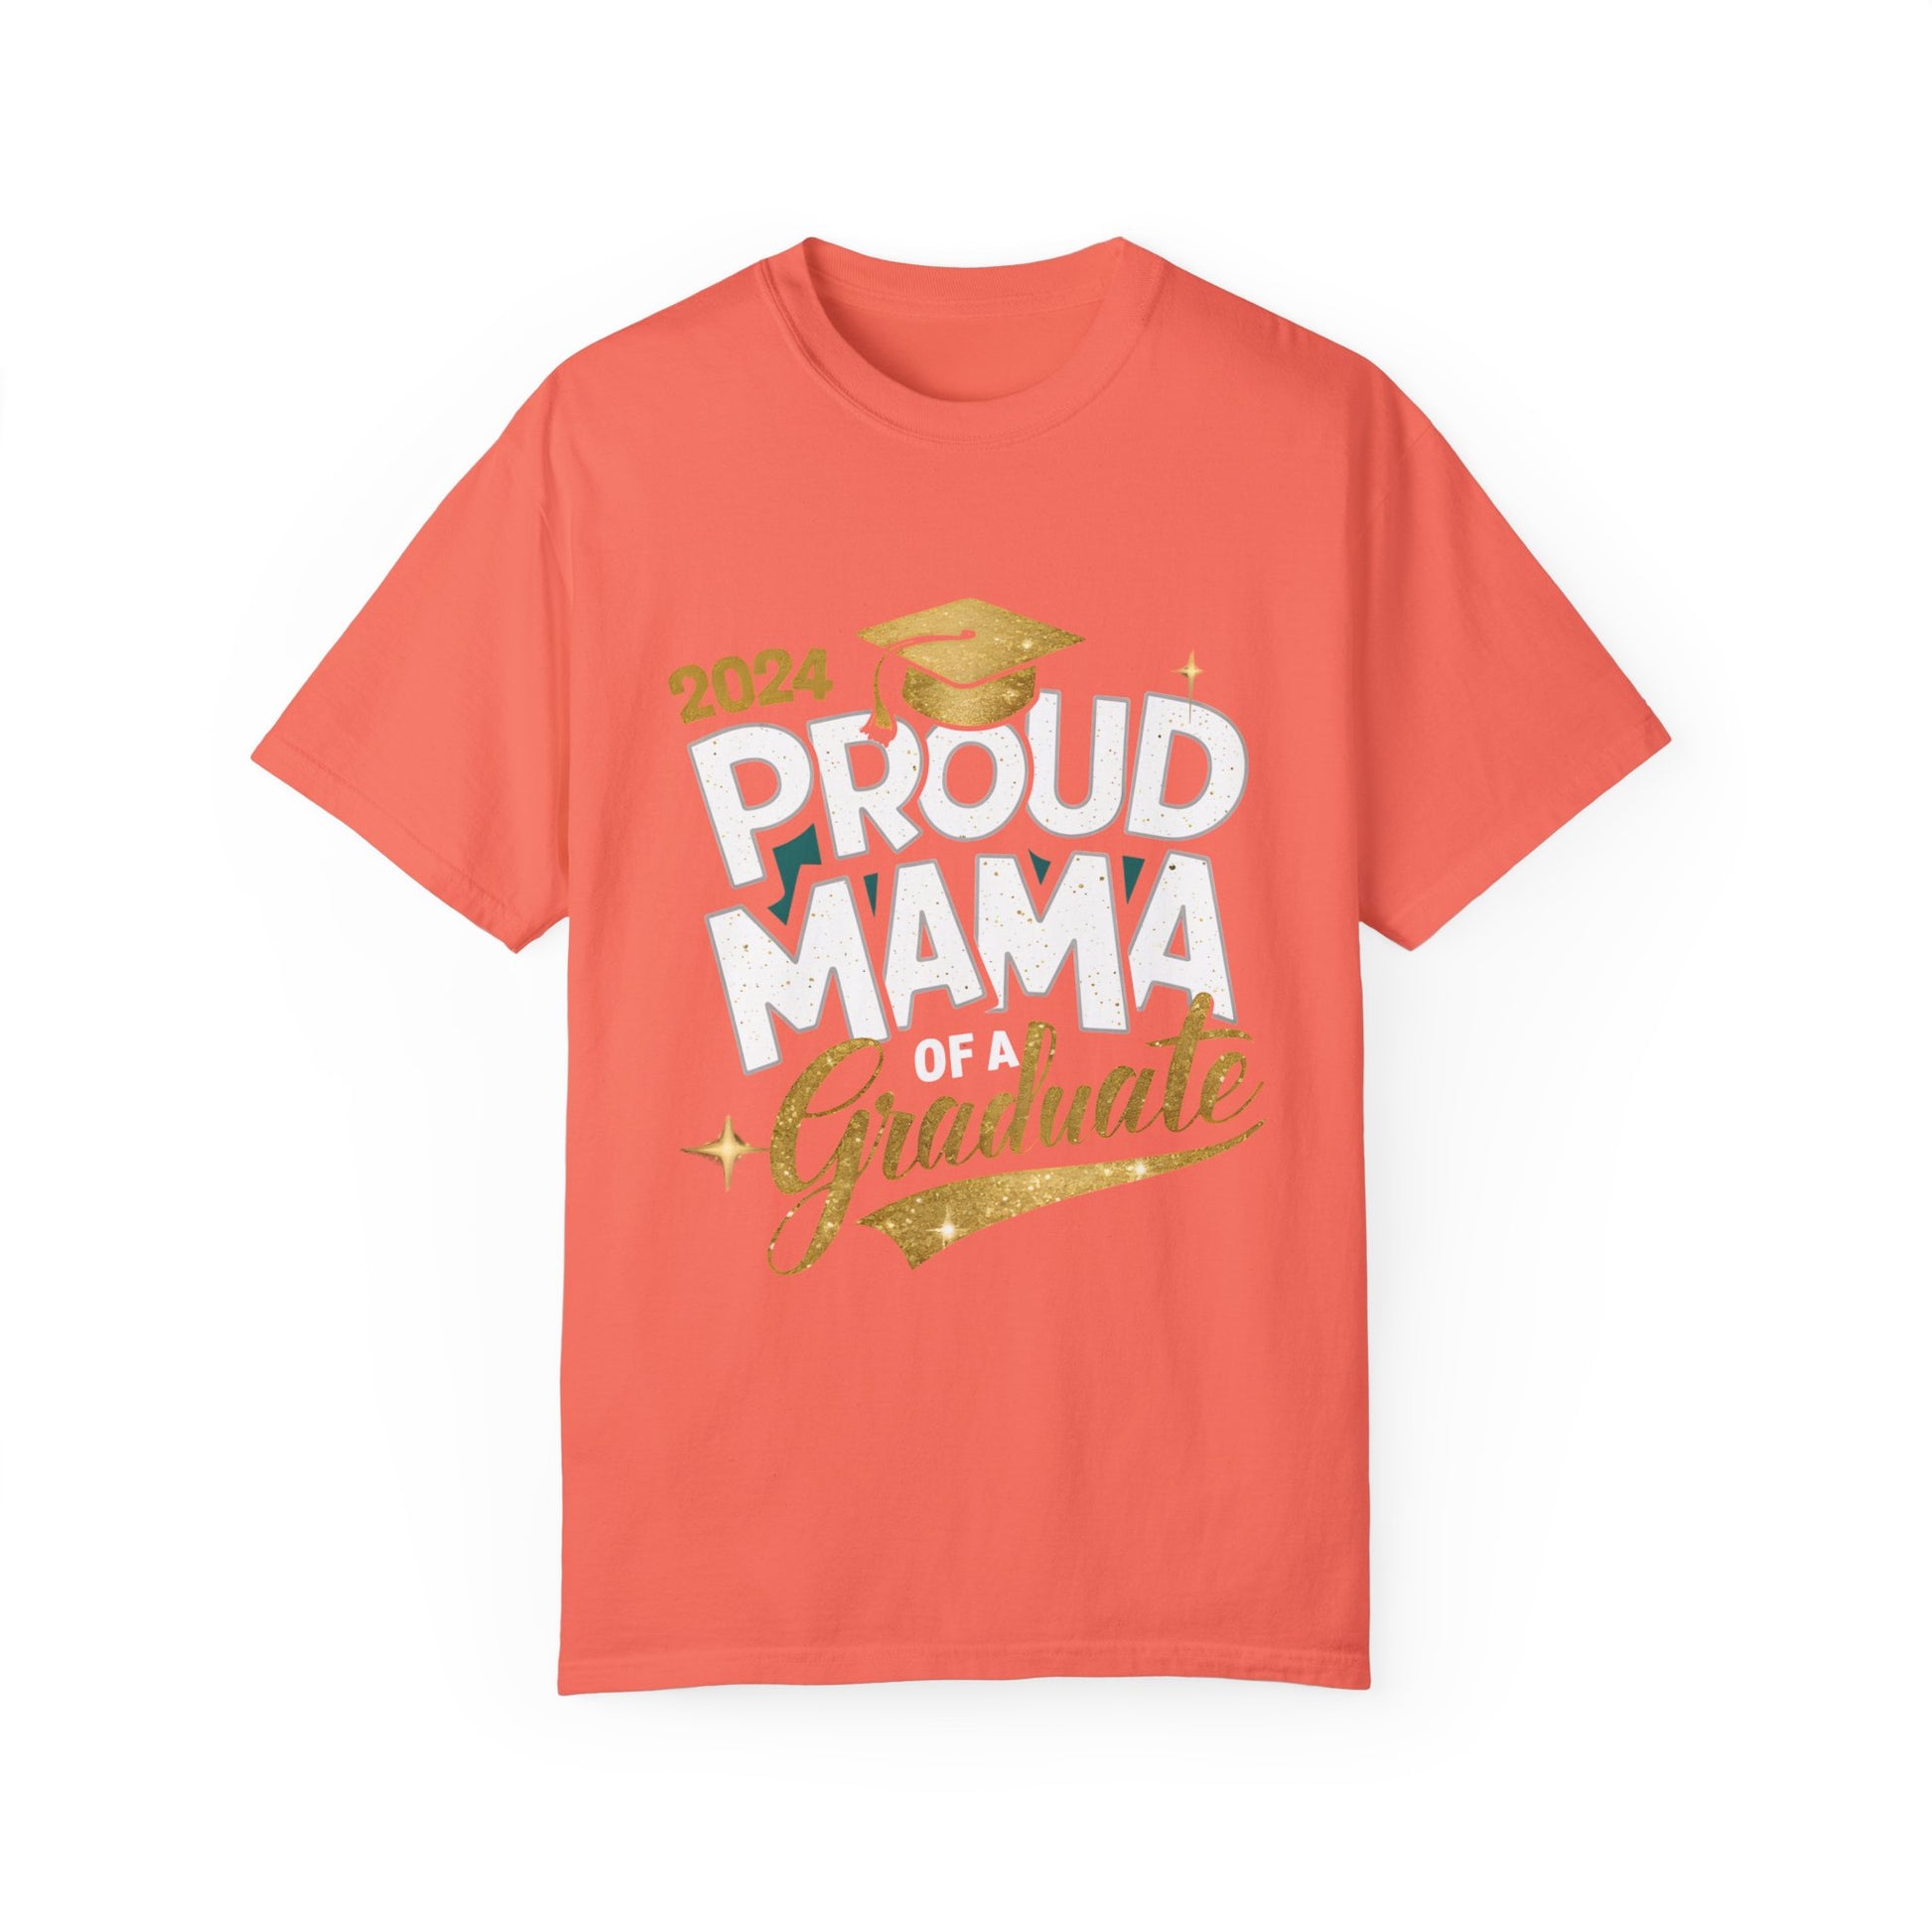 Proud Mama of a 2024 Graduate Unisex Garment-dyed T-shirt Cotton Funny Humorous Graphic Soft Premium Unisex Men Women Bright Salmon T-shirt Birthday Gift-6